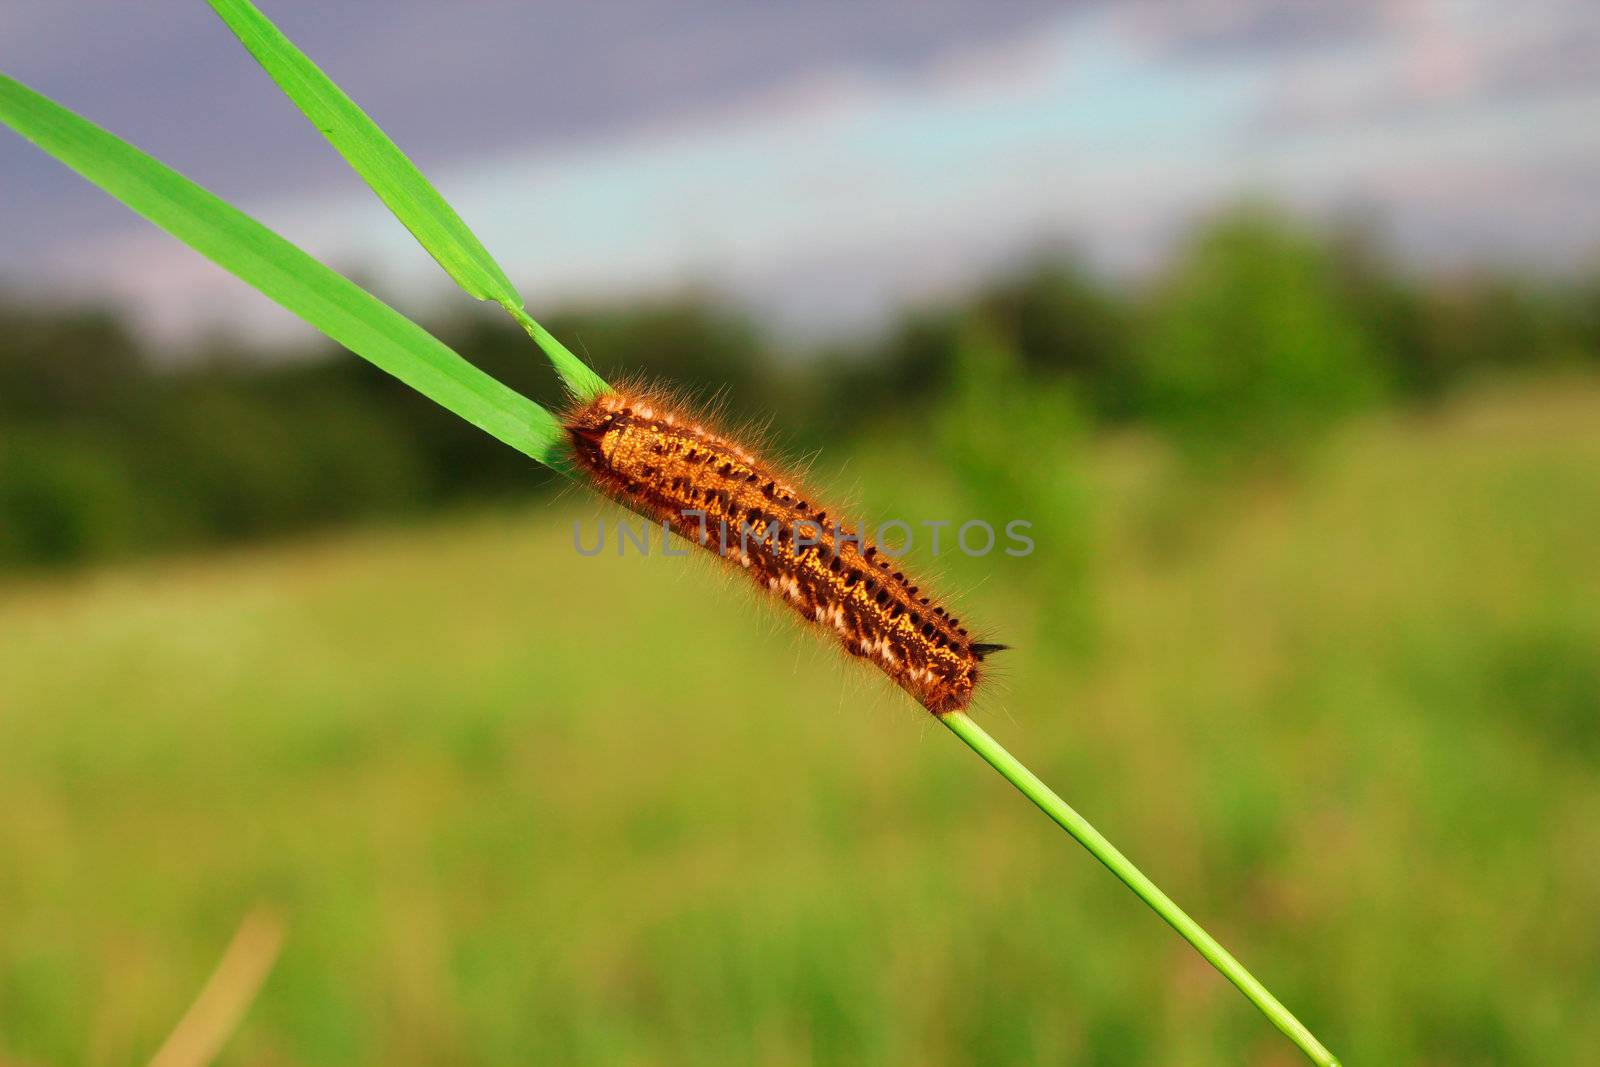 Caterpillar on grass blade with green field background